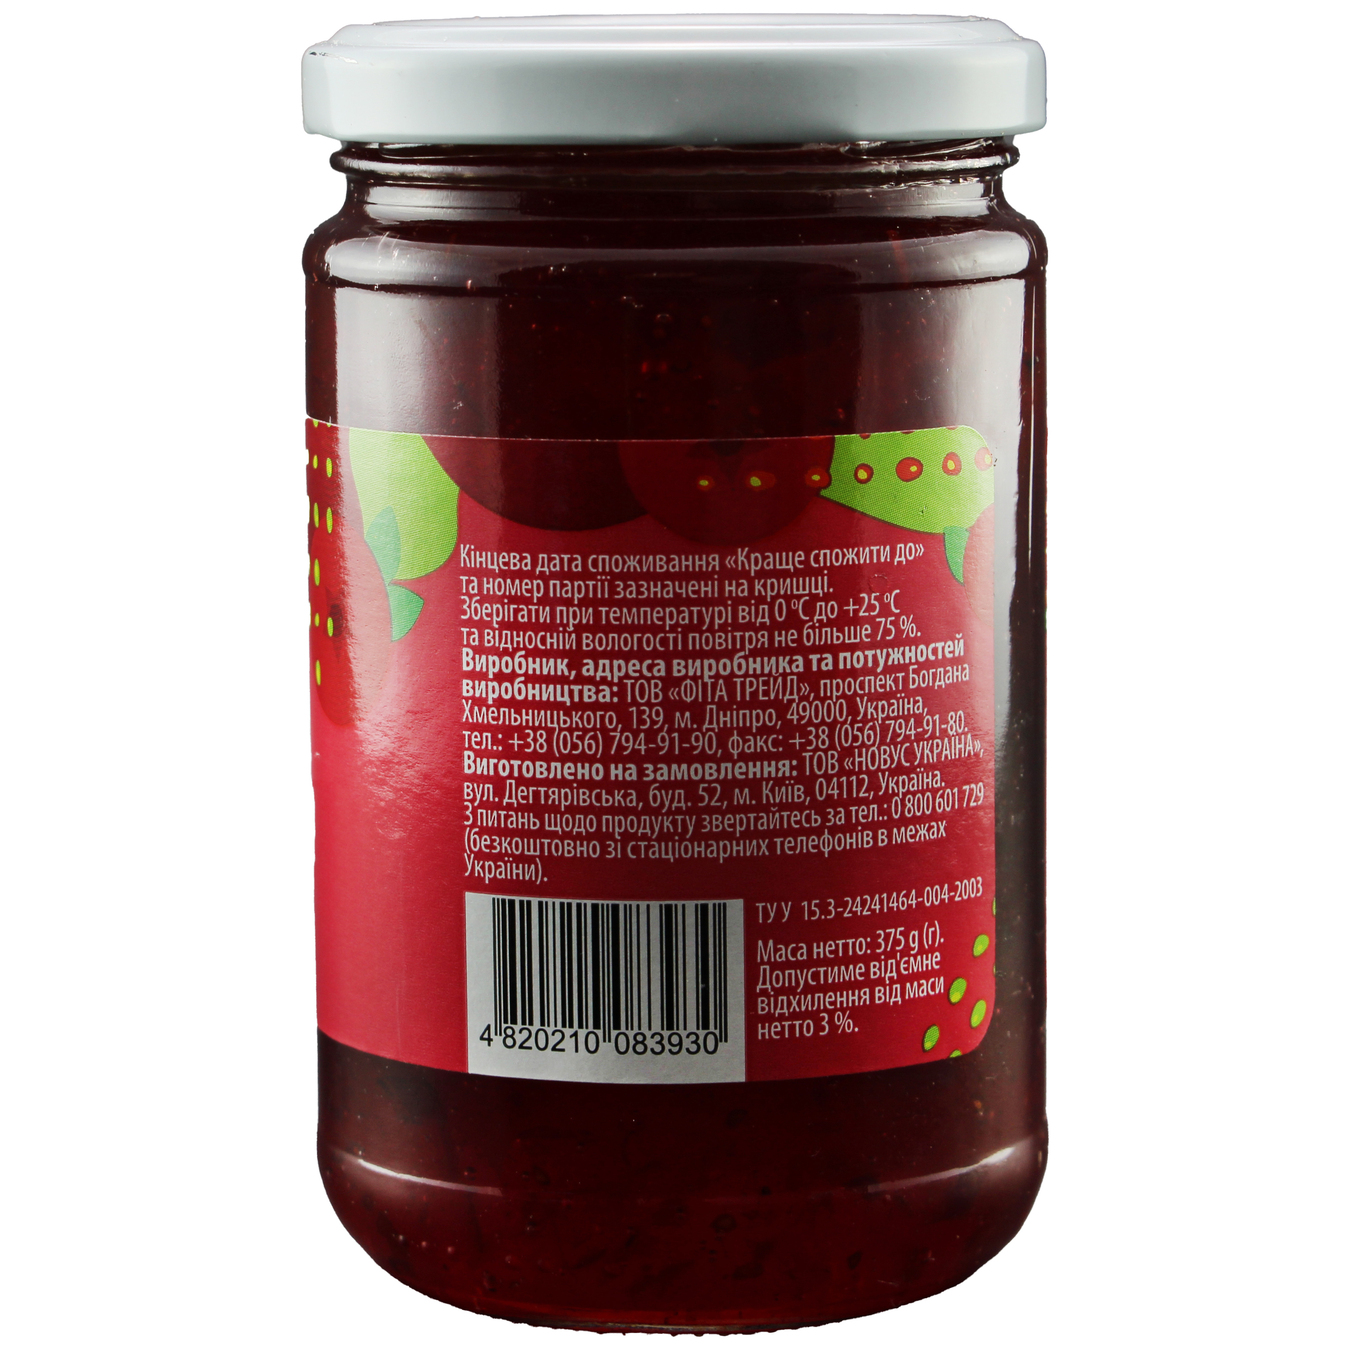 NOVUS Cranberry Jam 375g 5